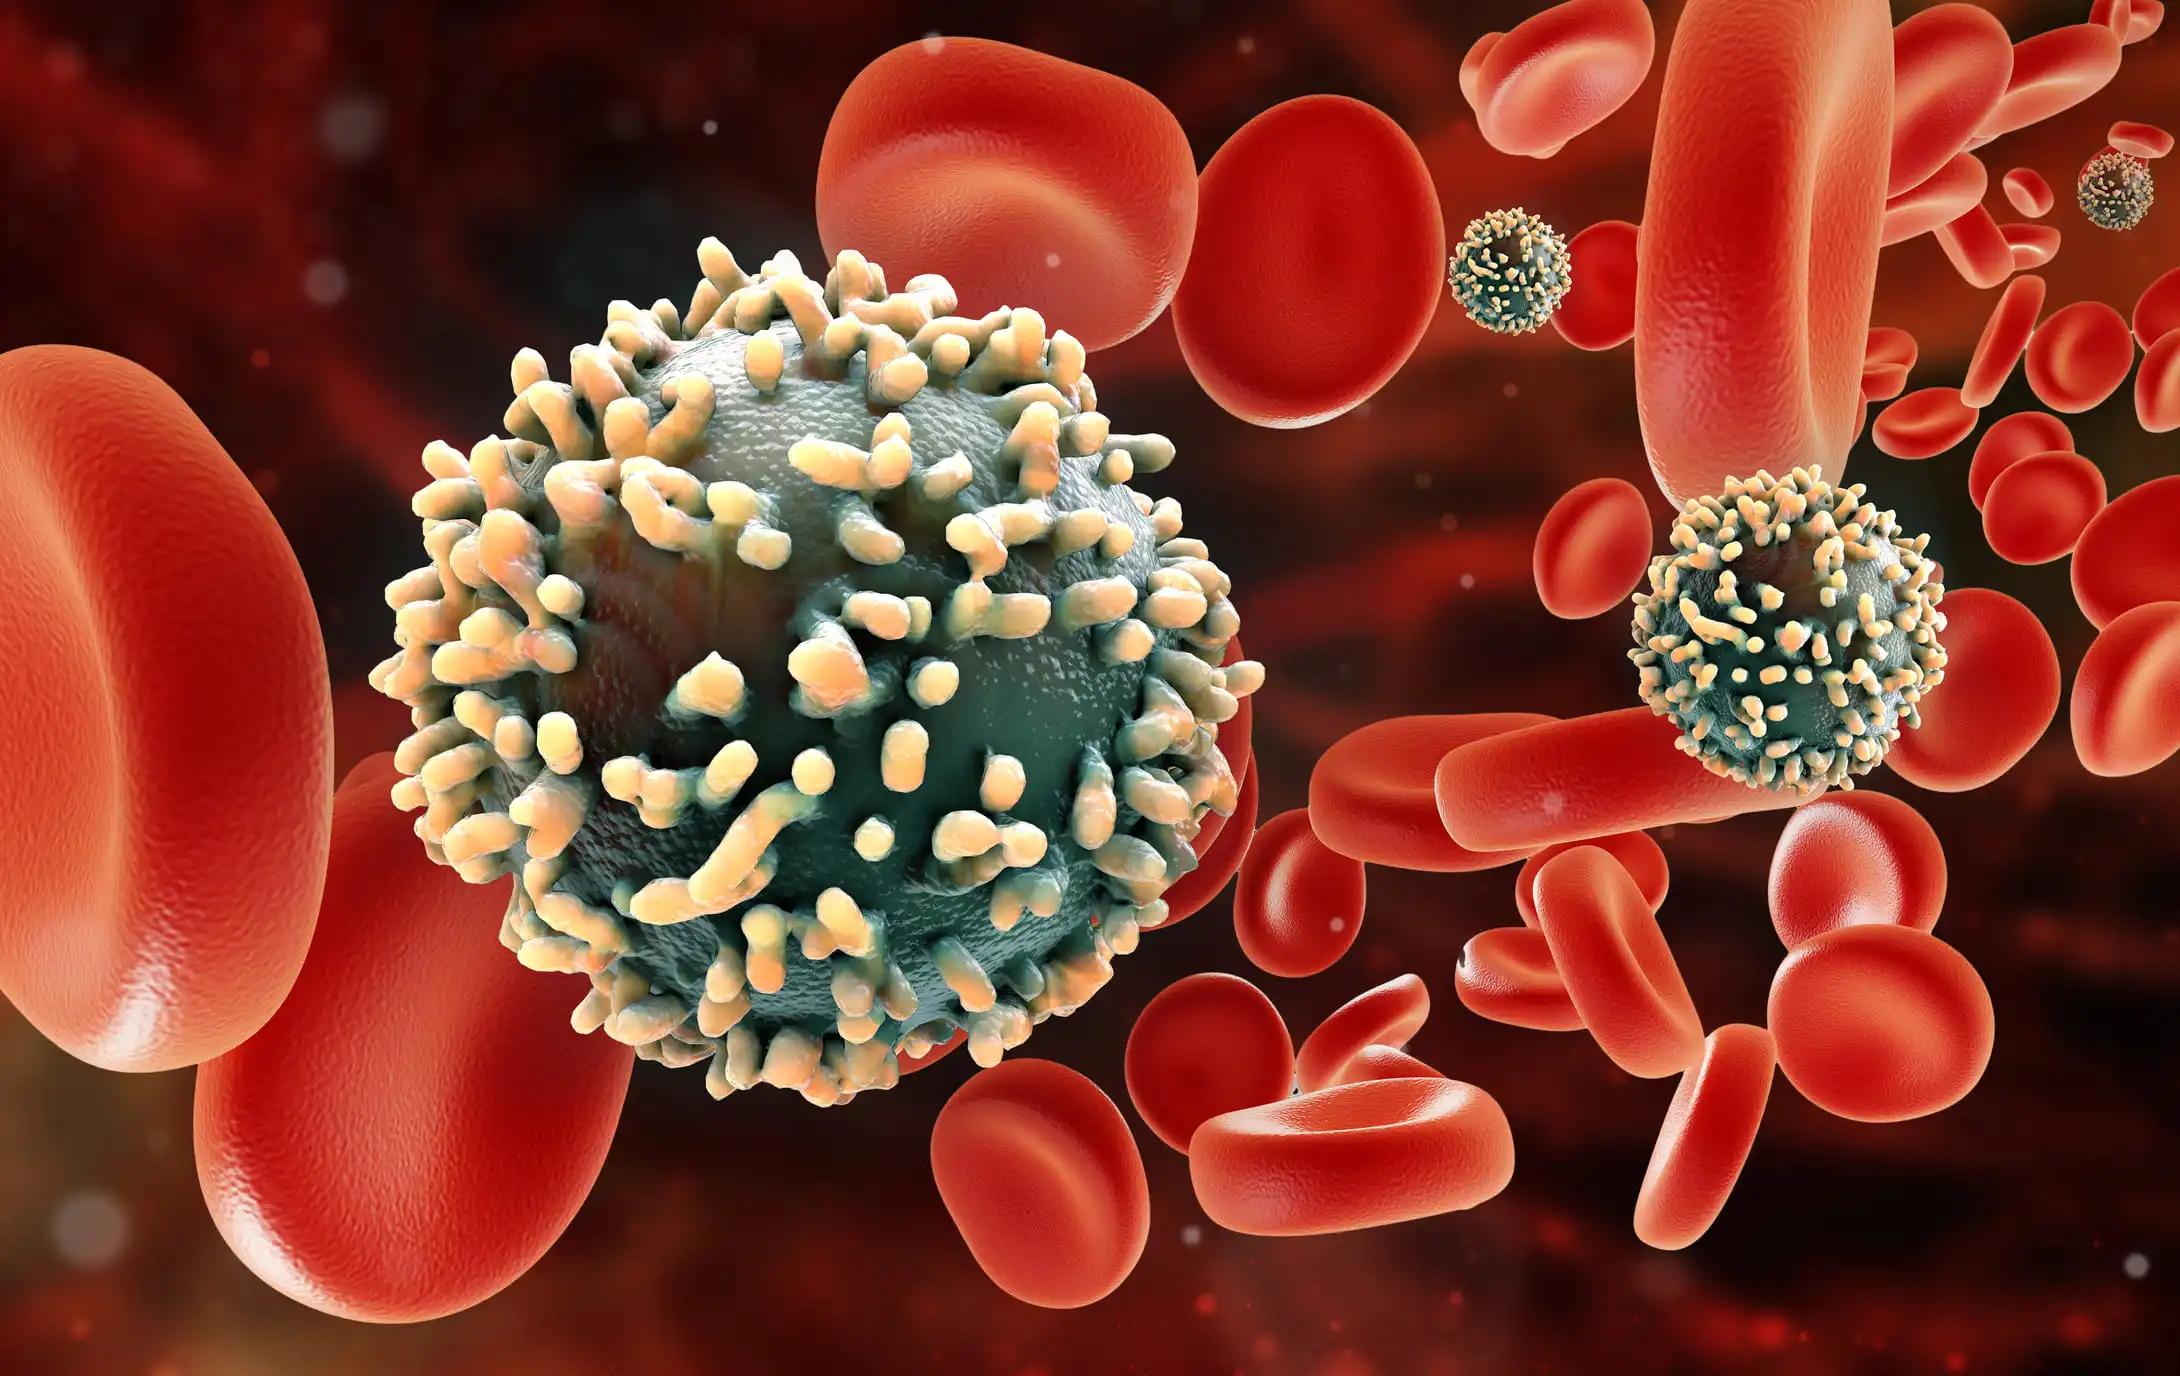 Cancerios Virus in a Blood Stream